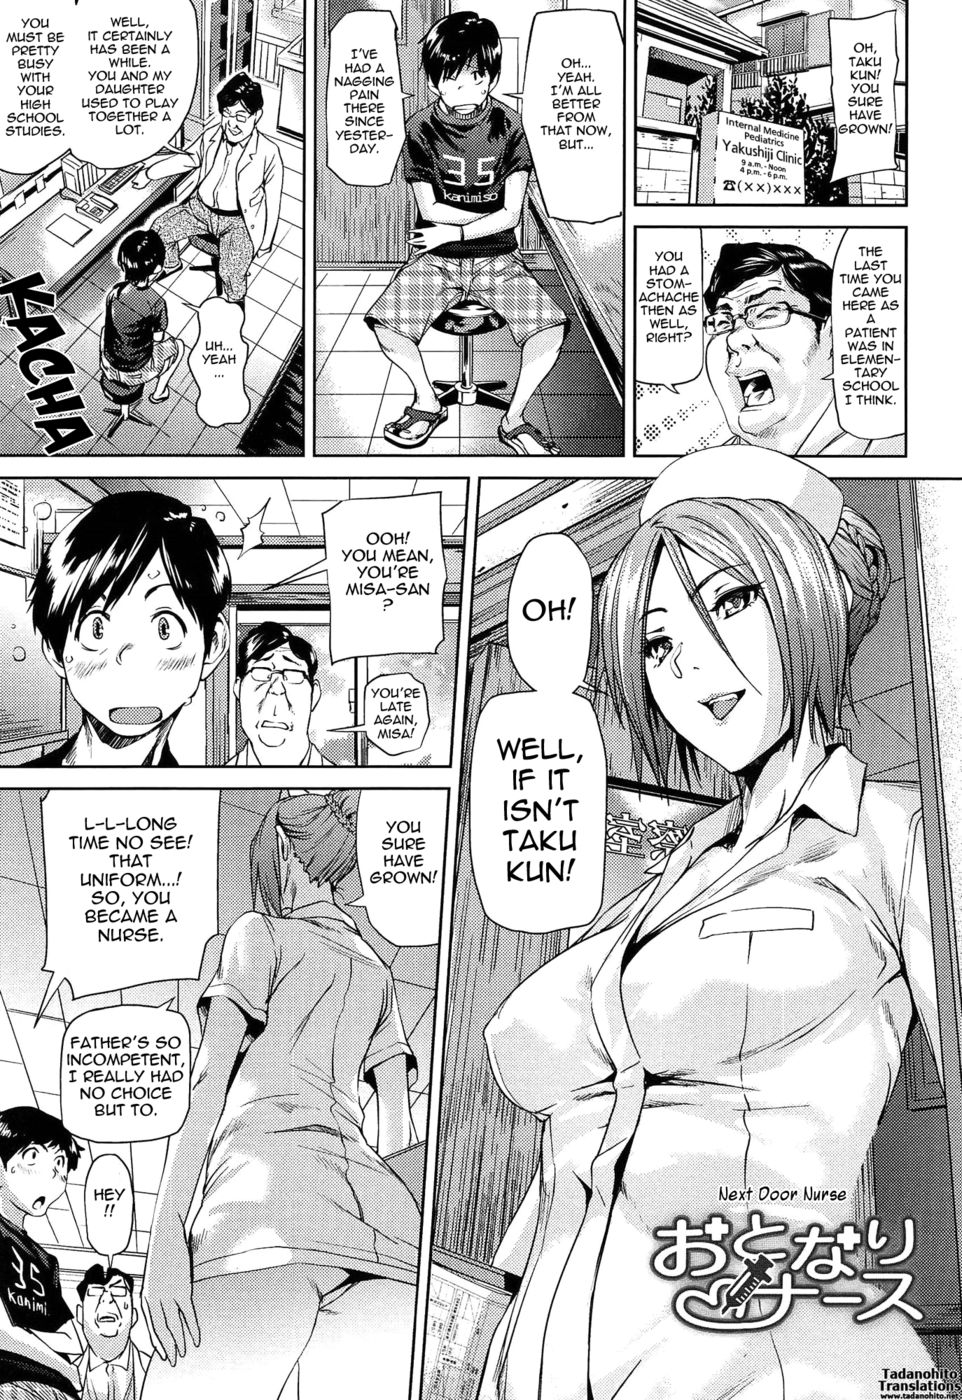 Mature Comic Strip Porn - Read Next Door Nurse Original Work korean adult manga